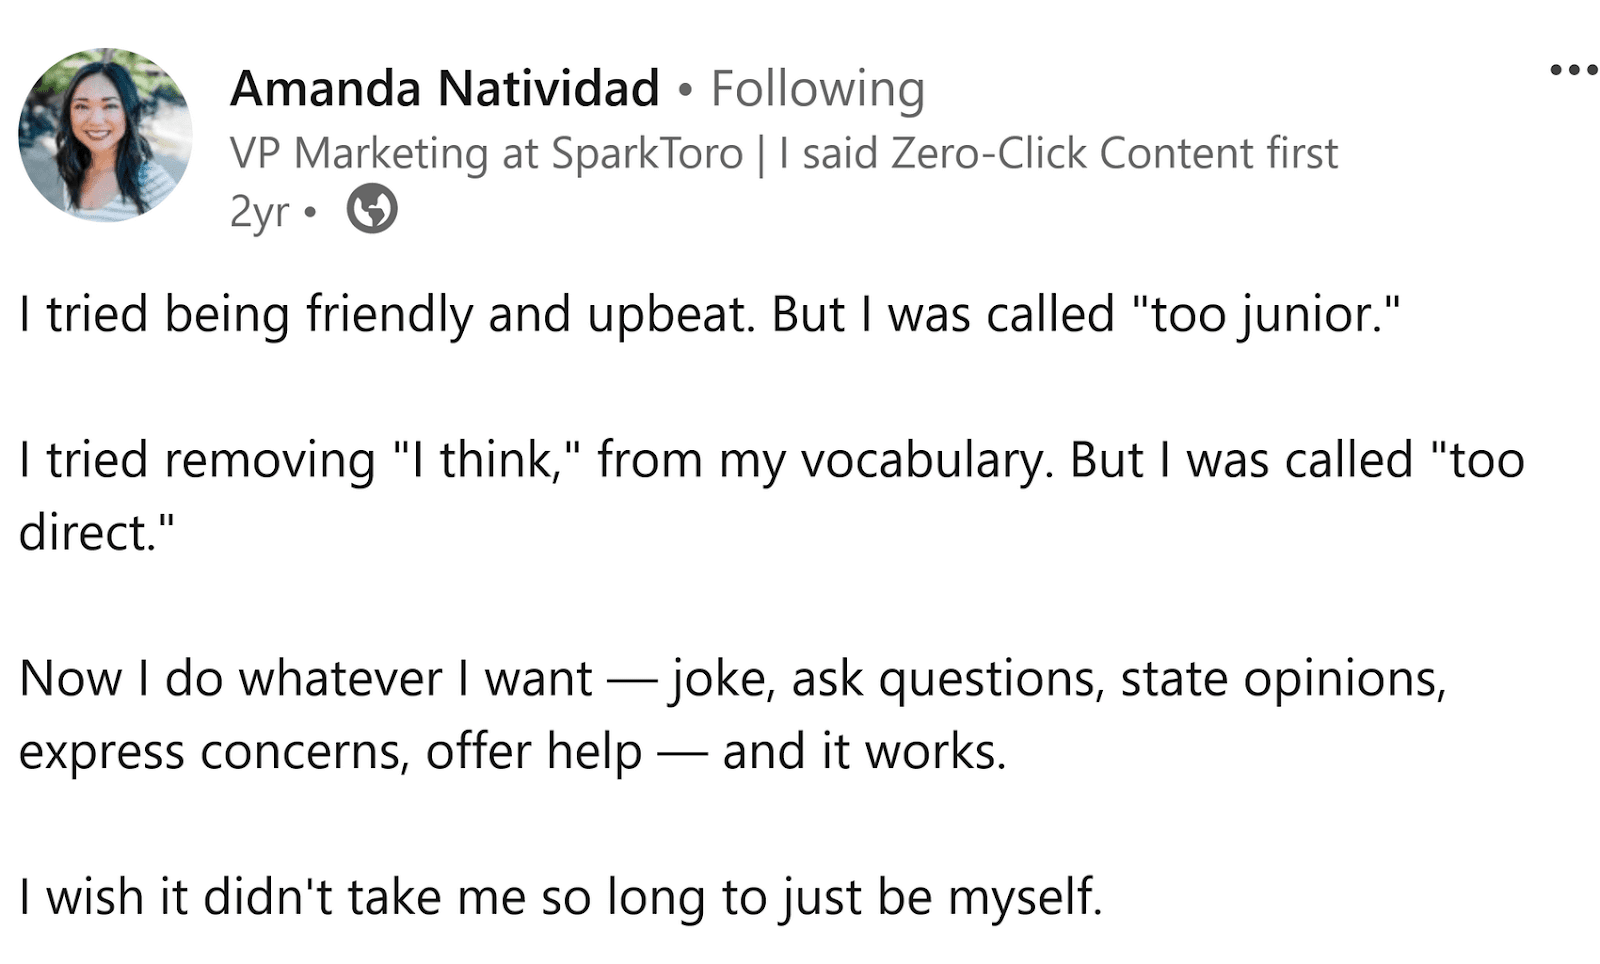 LinkedIn post by Amanda Natividad, VP of Marketing at SparkToro, reflecting on her personal growth in communication.